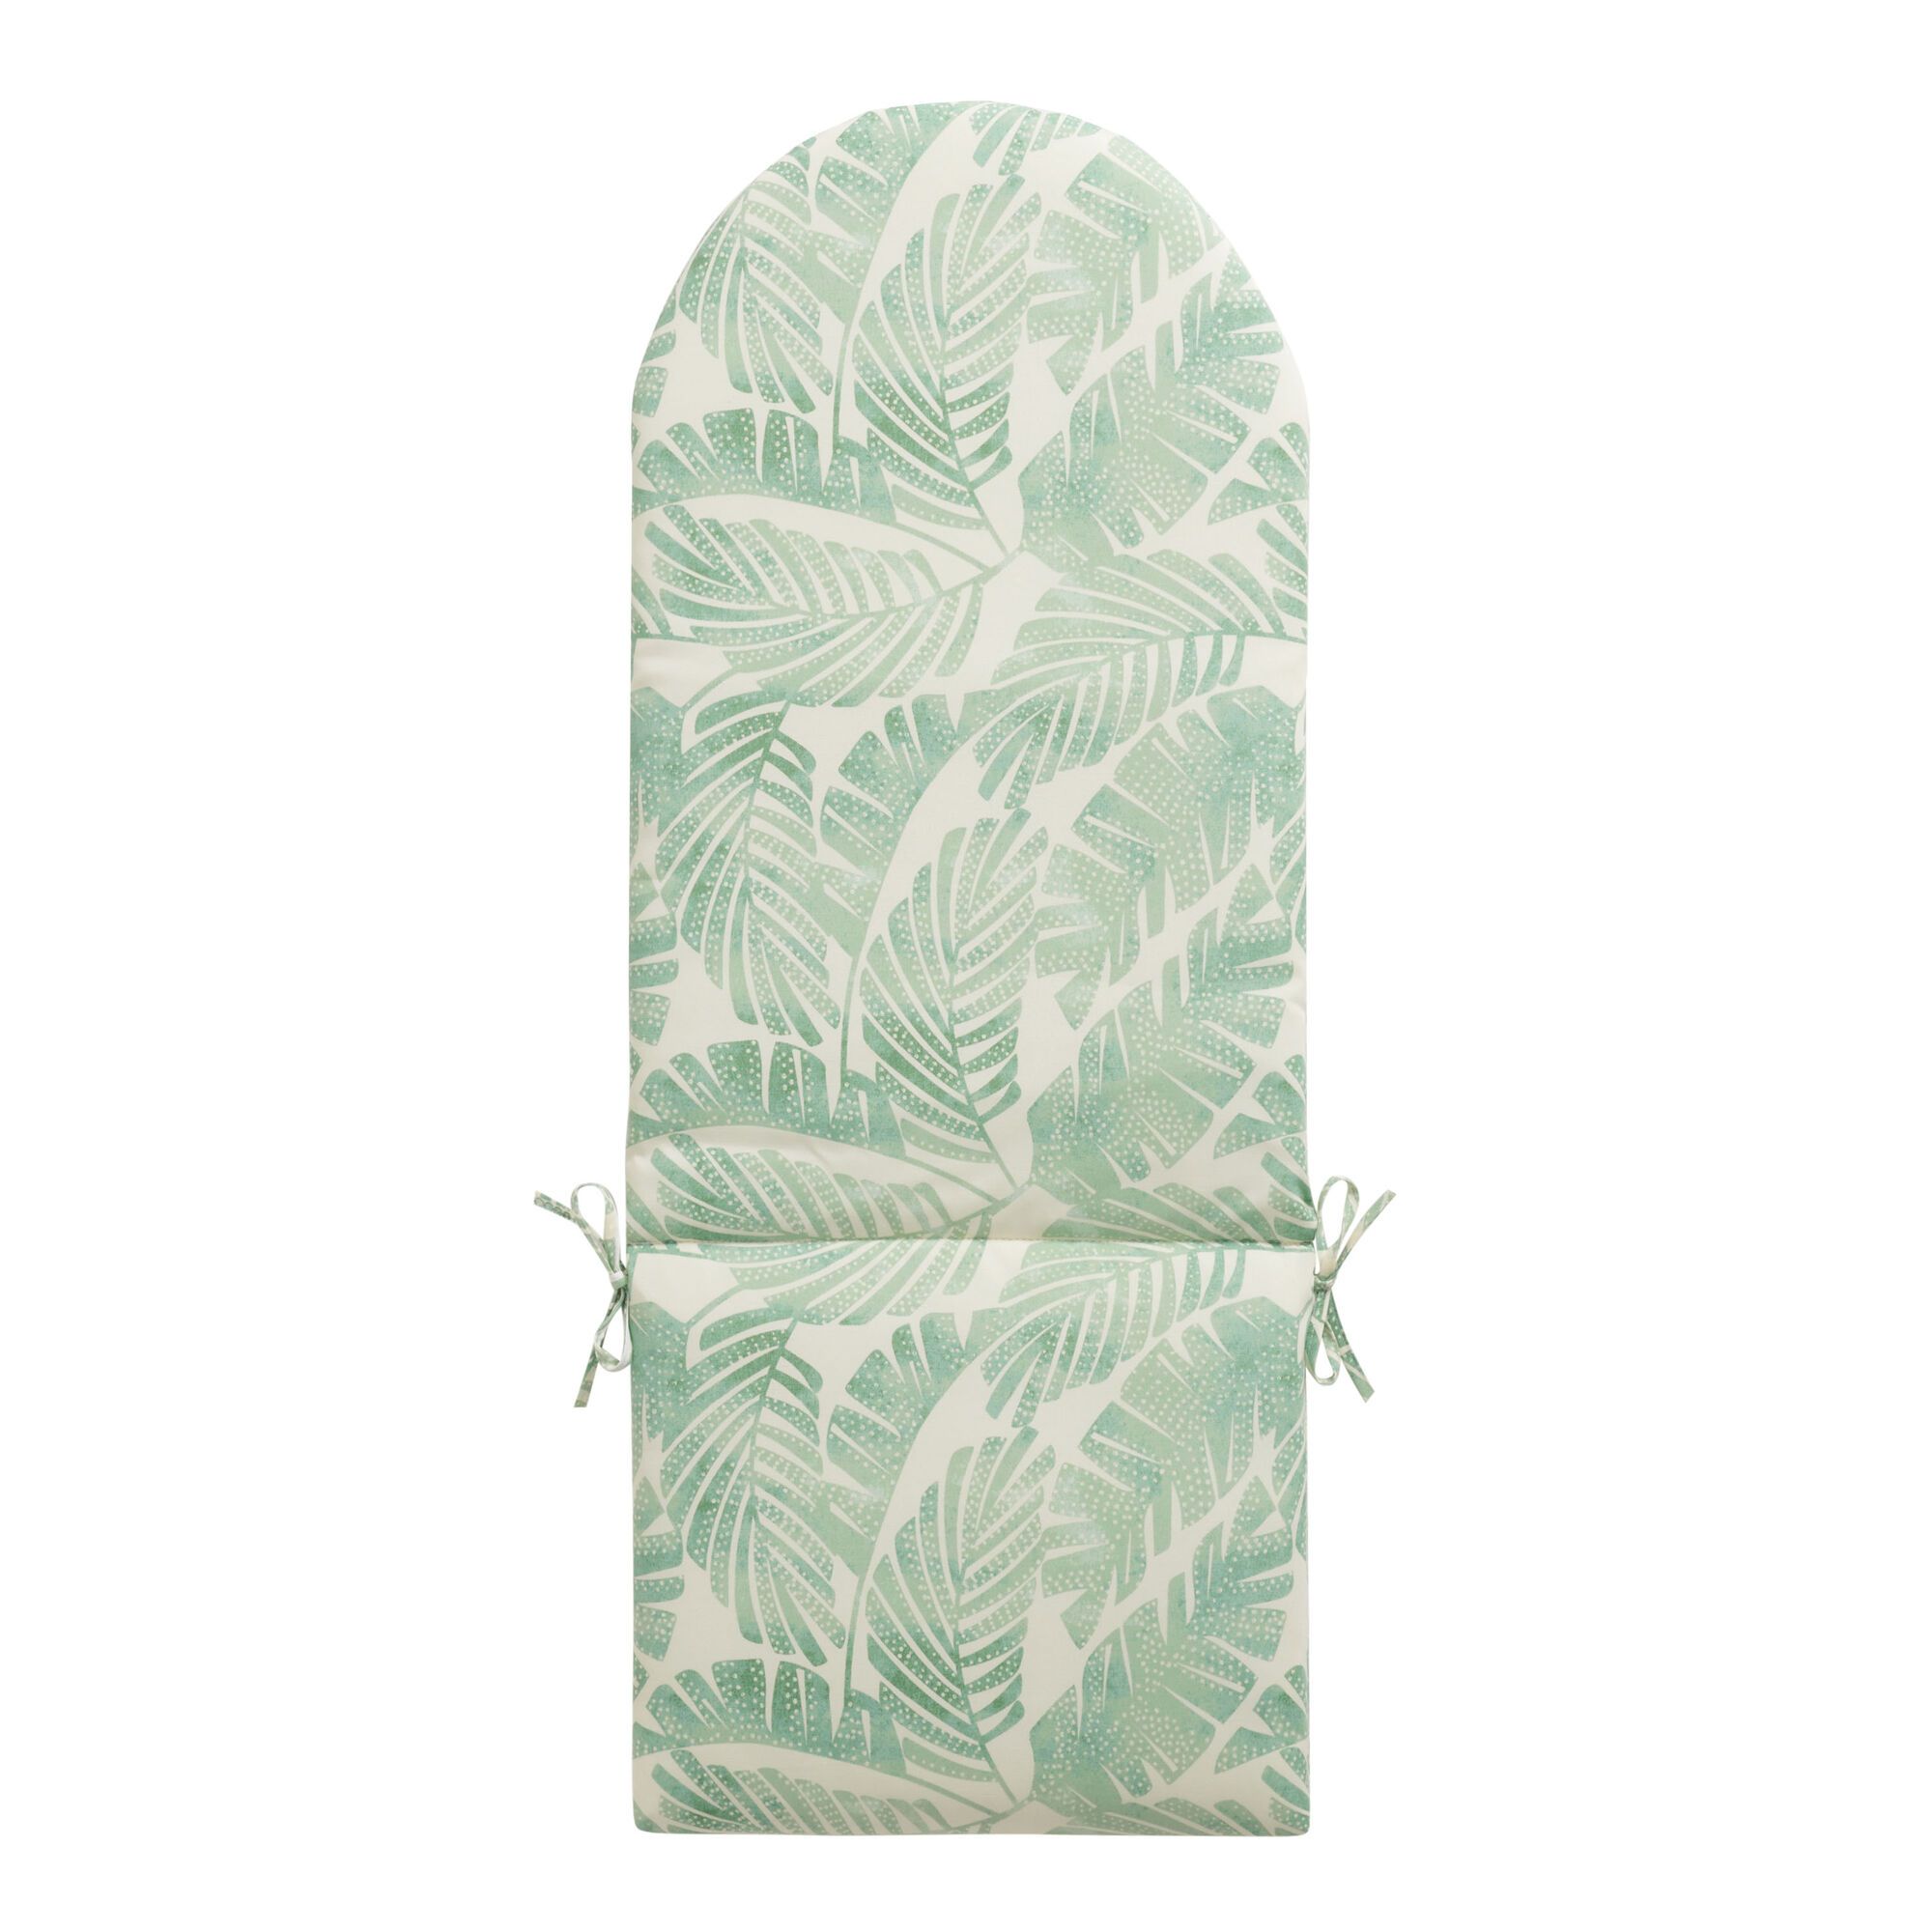 Jakarta Palm Ivory and Green Adirondack Chair Cushion - World Market | World Market